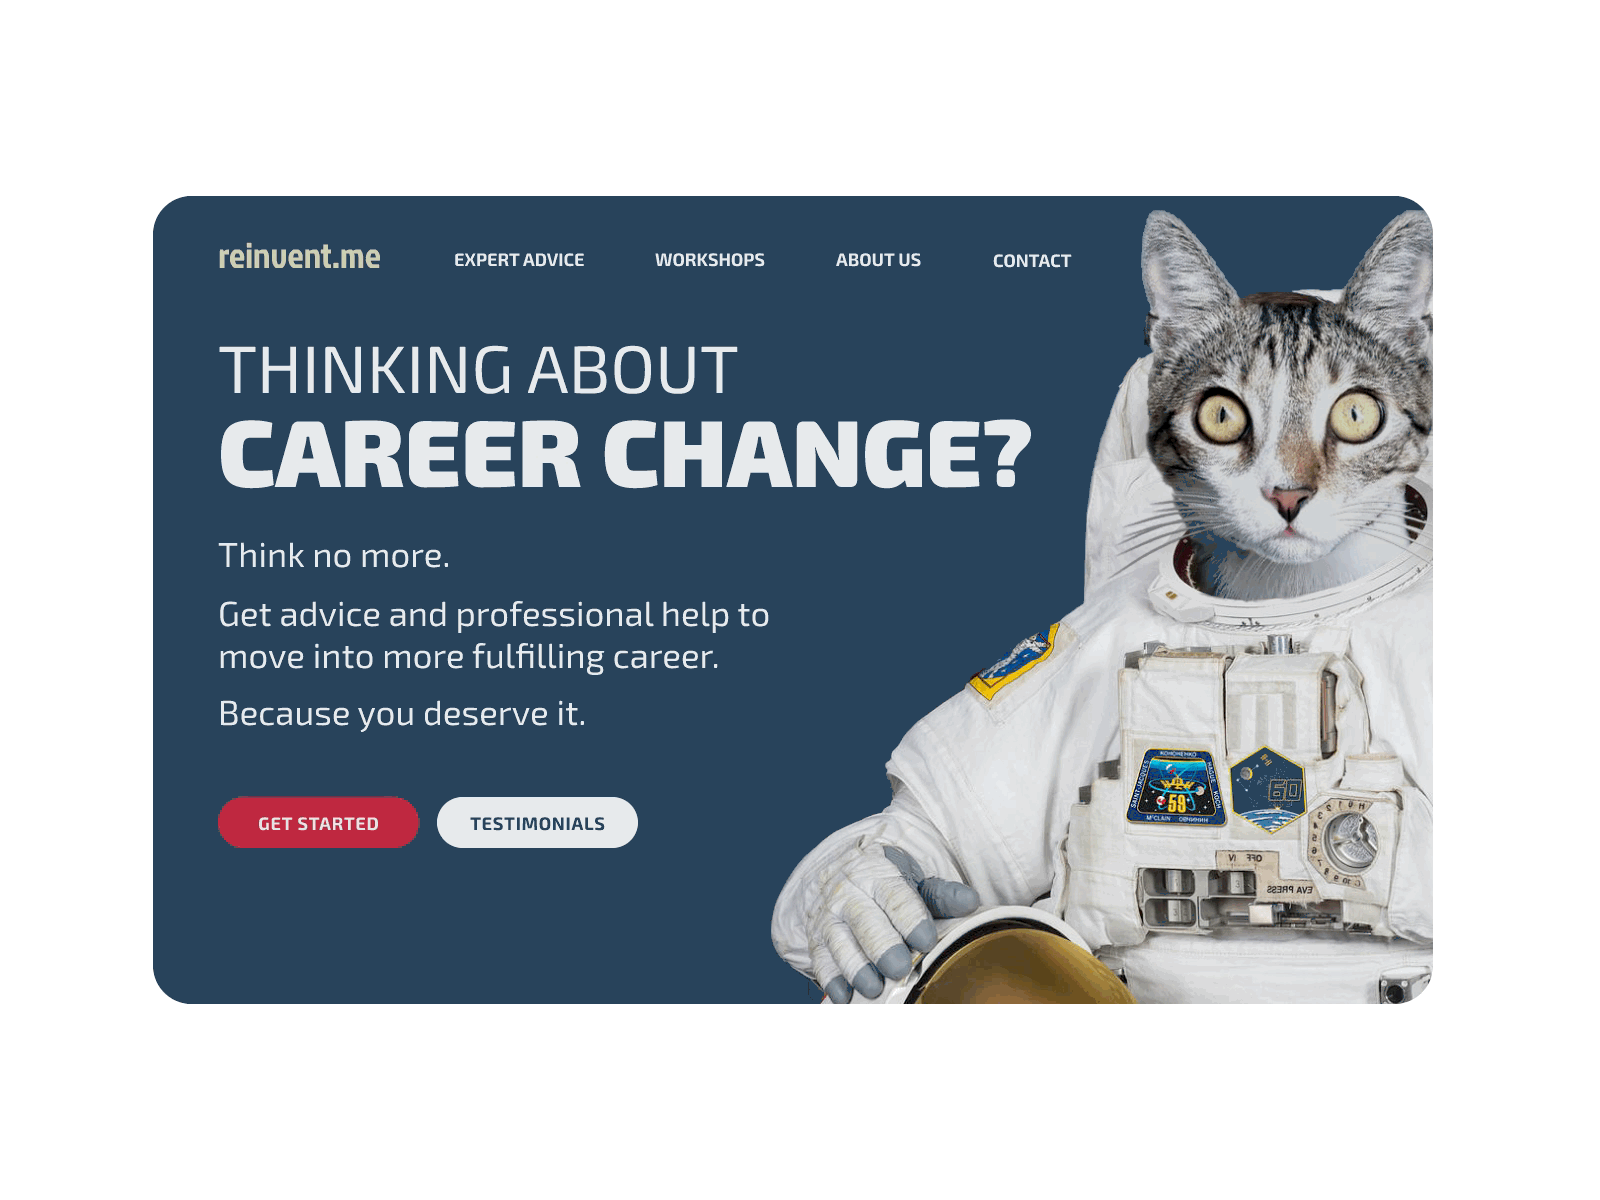 Career change website - landing page